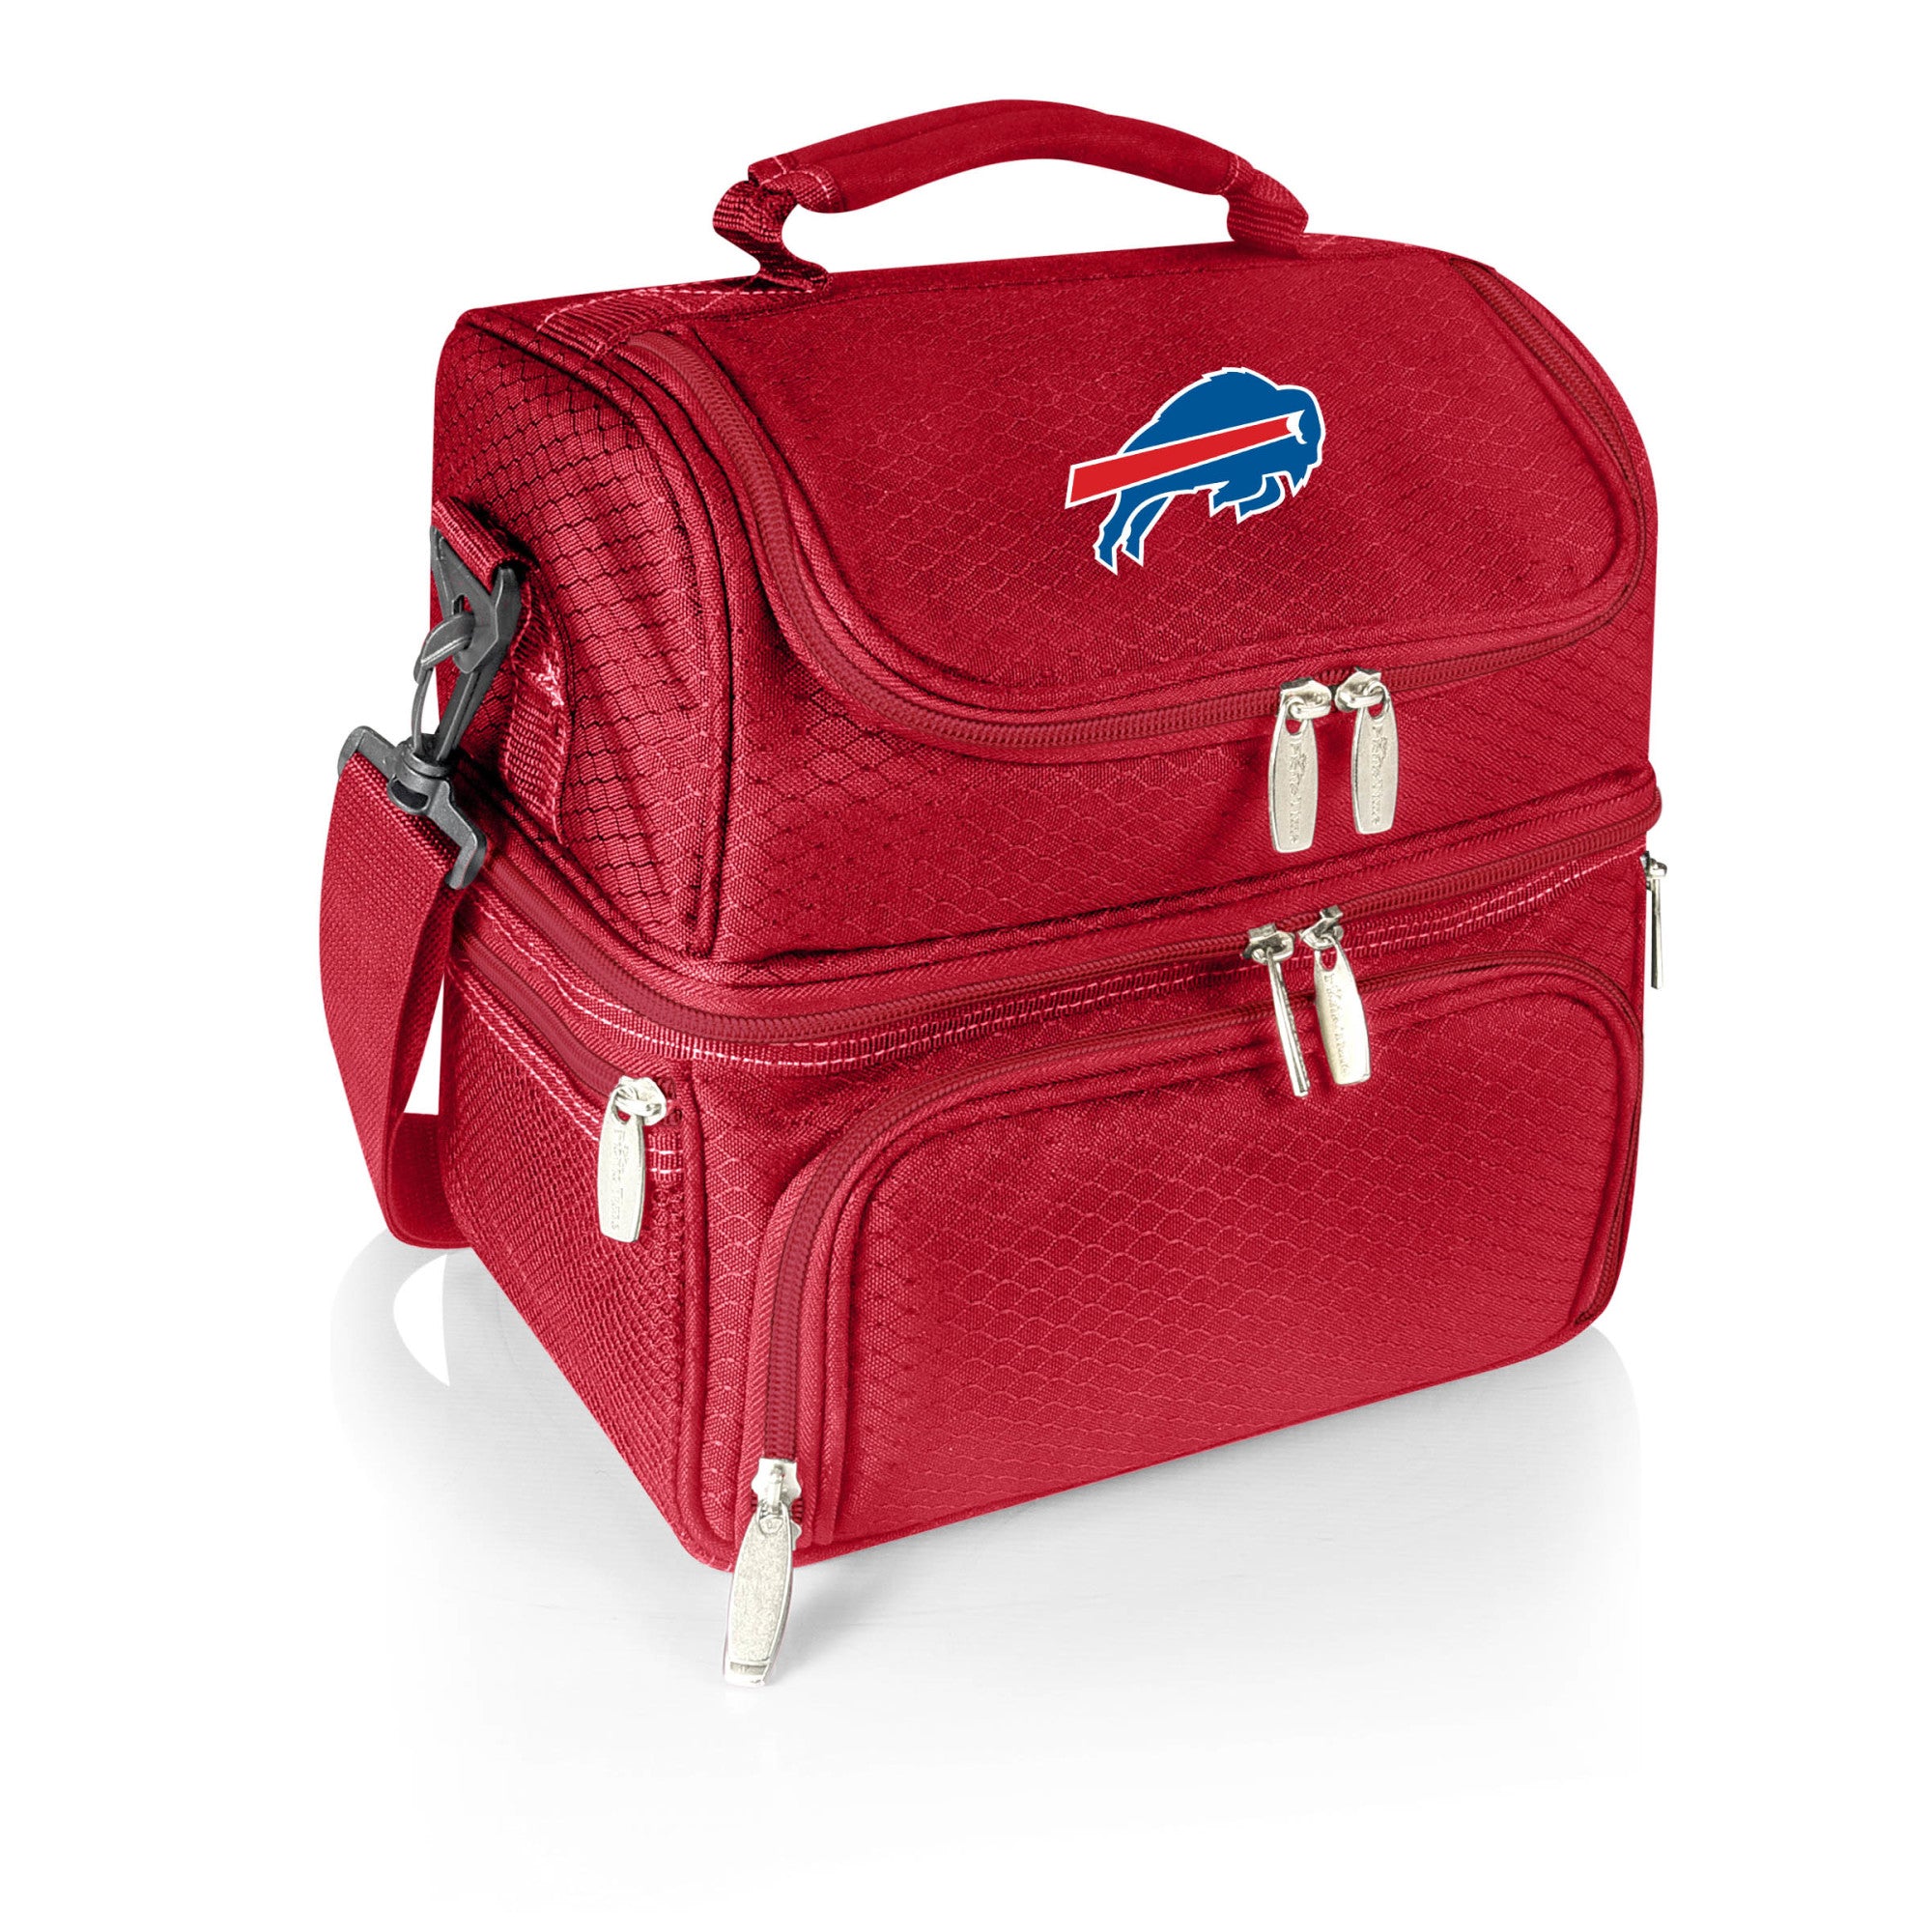 Buffalo Bills - Pranzo Lunch Bag Cooler with Utensils